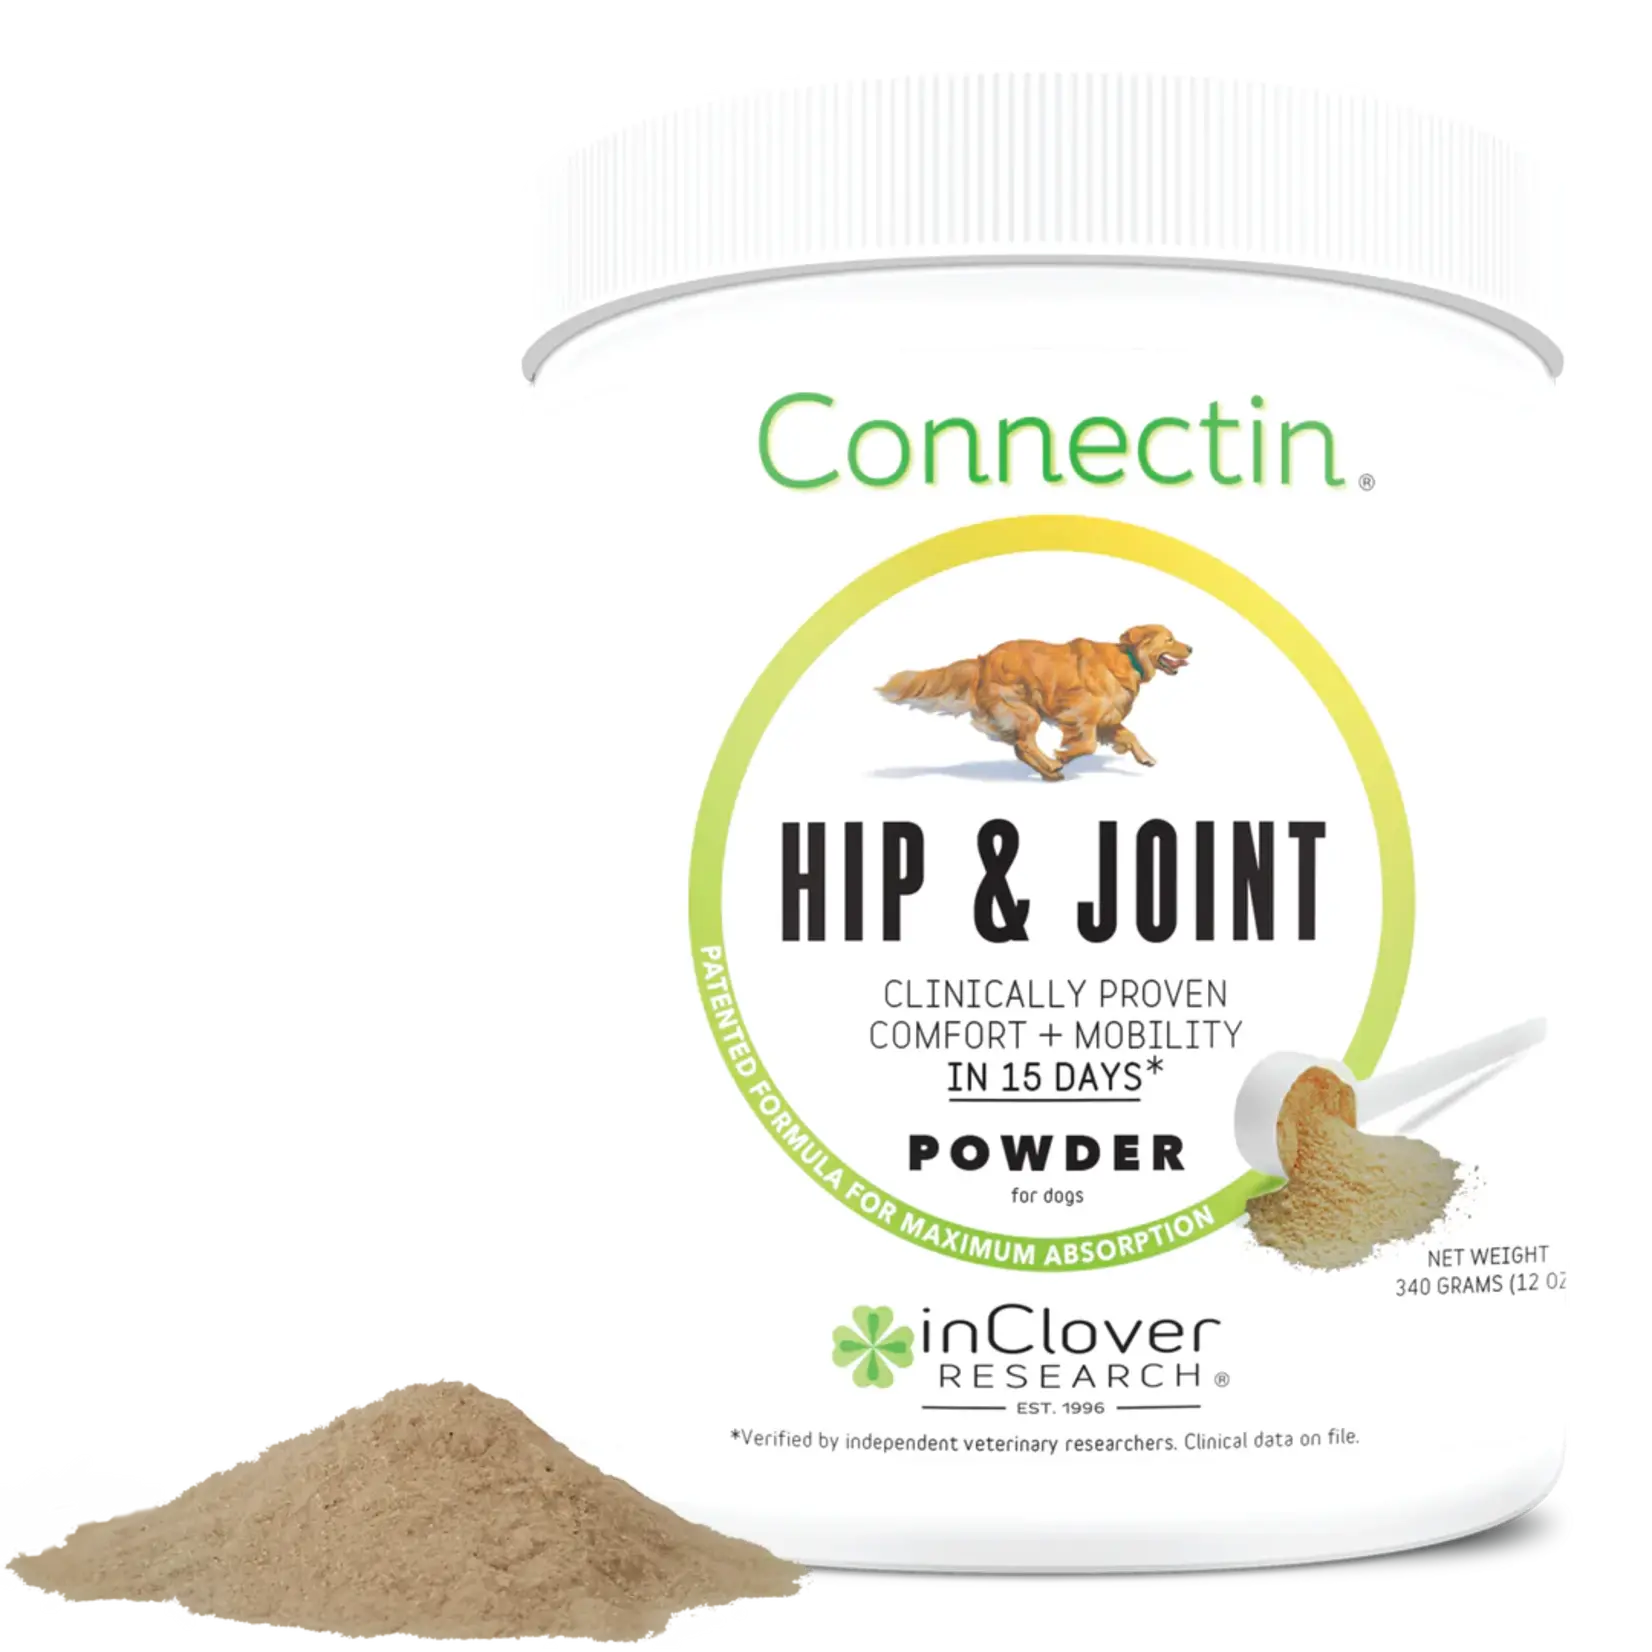 InClover Research inClover Connectin Hip & Joint Powder 23oz